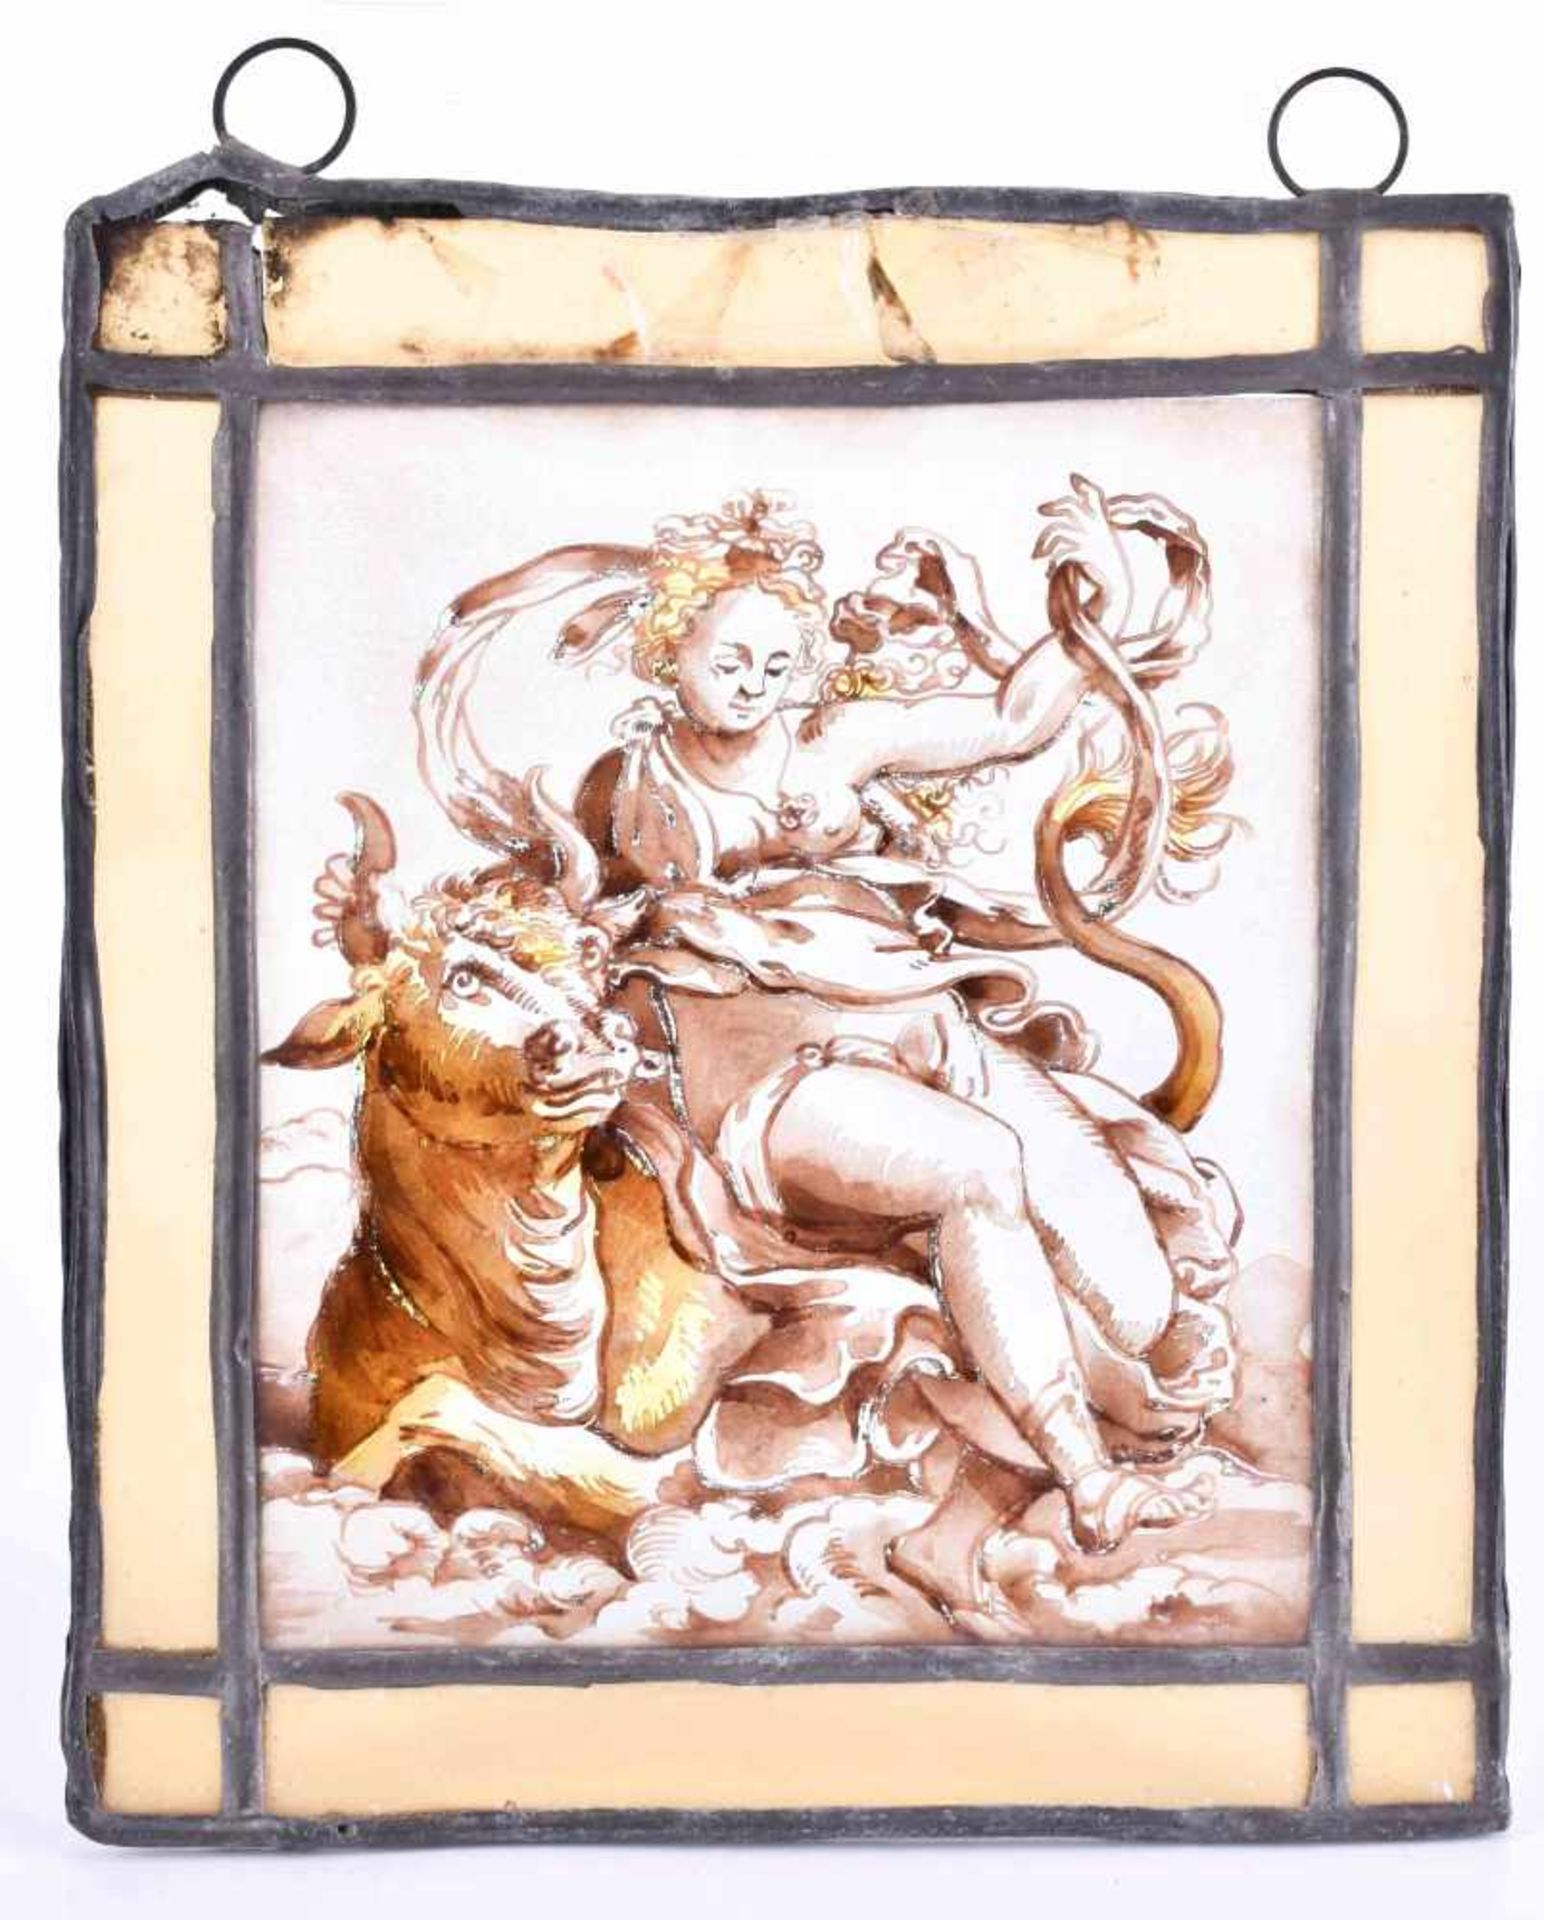 Baroque lead glazing around 175016,7 cm x 14,7 cmBarock-Bleiverglasung um 1750oberhalb Glas mit - Bild 2 aus 3